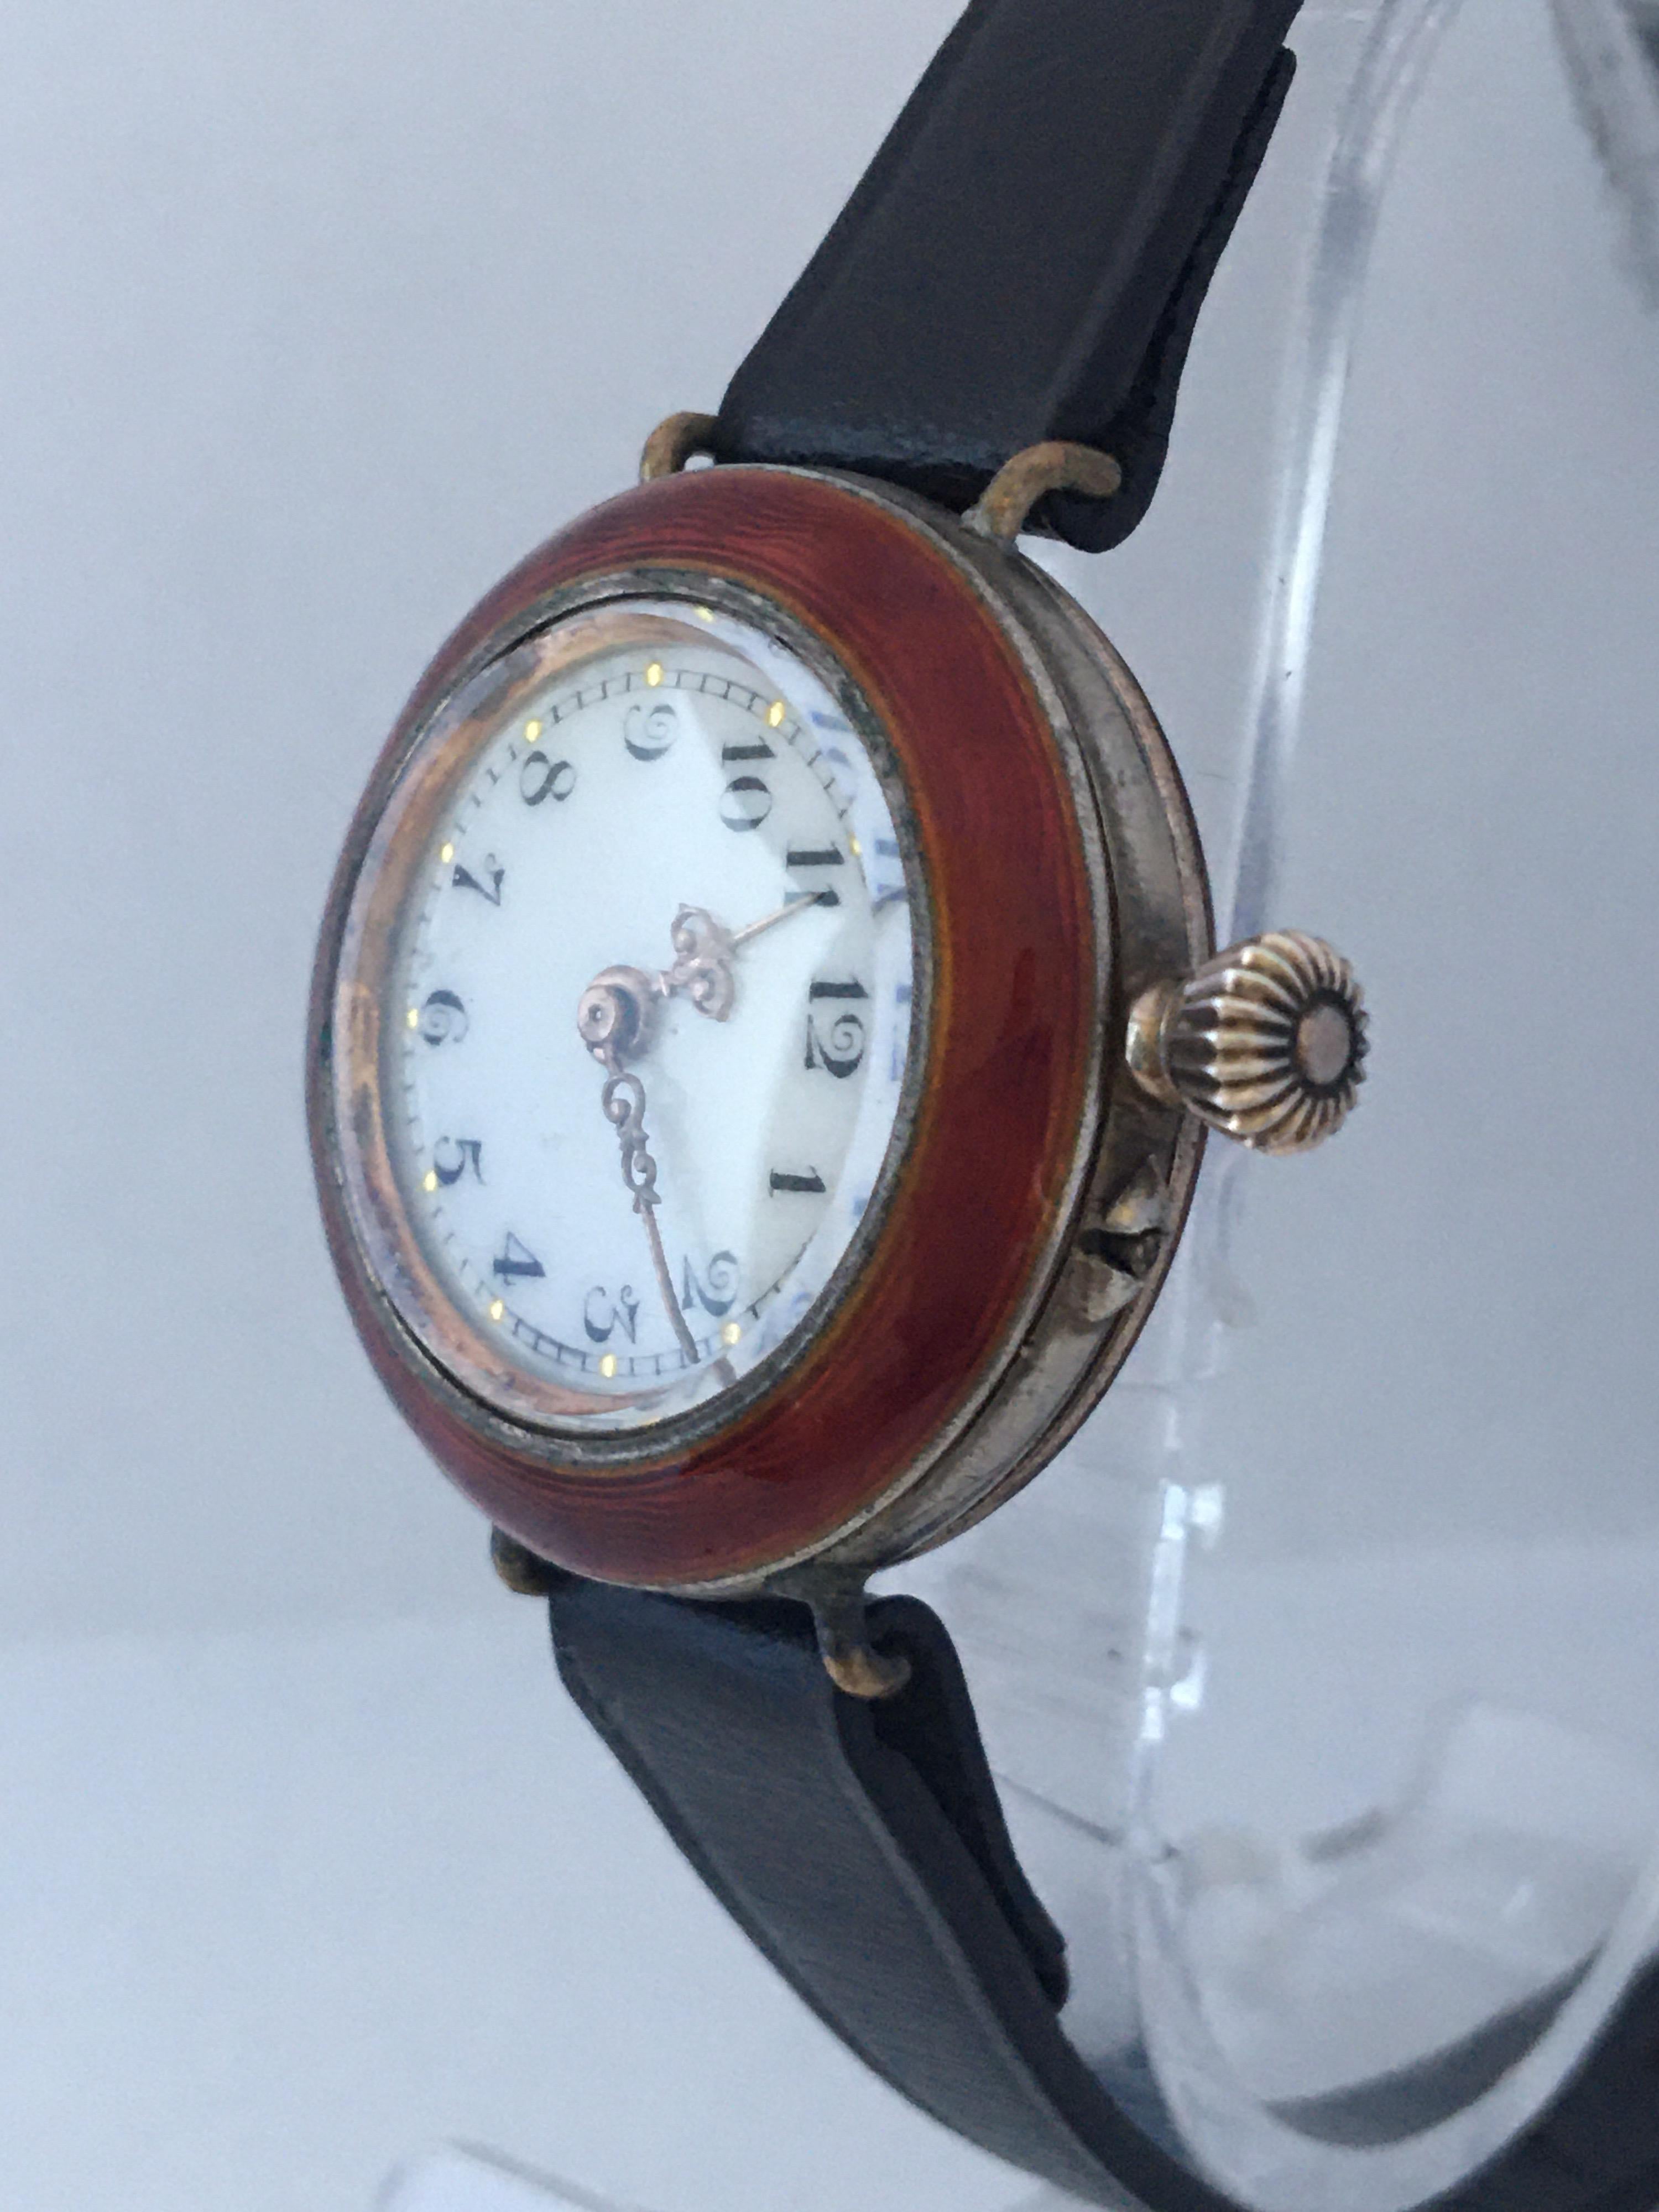 vikec watch price